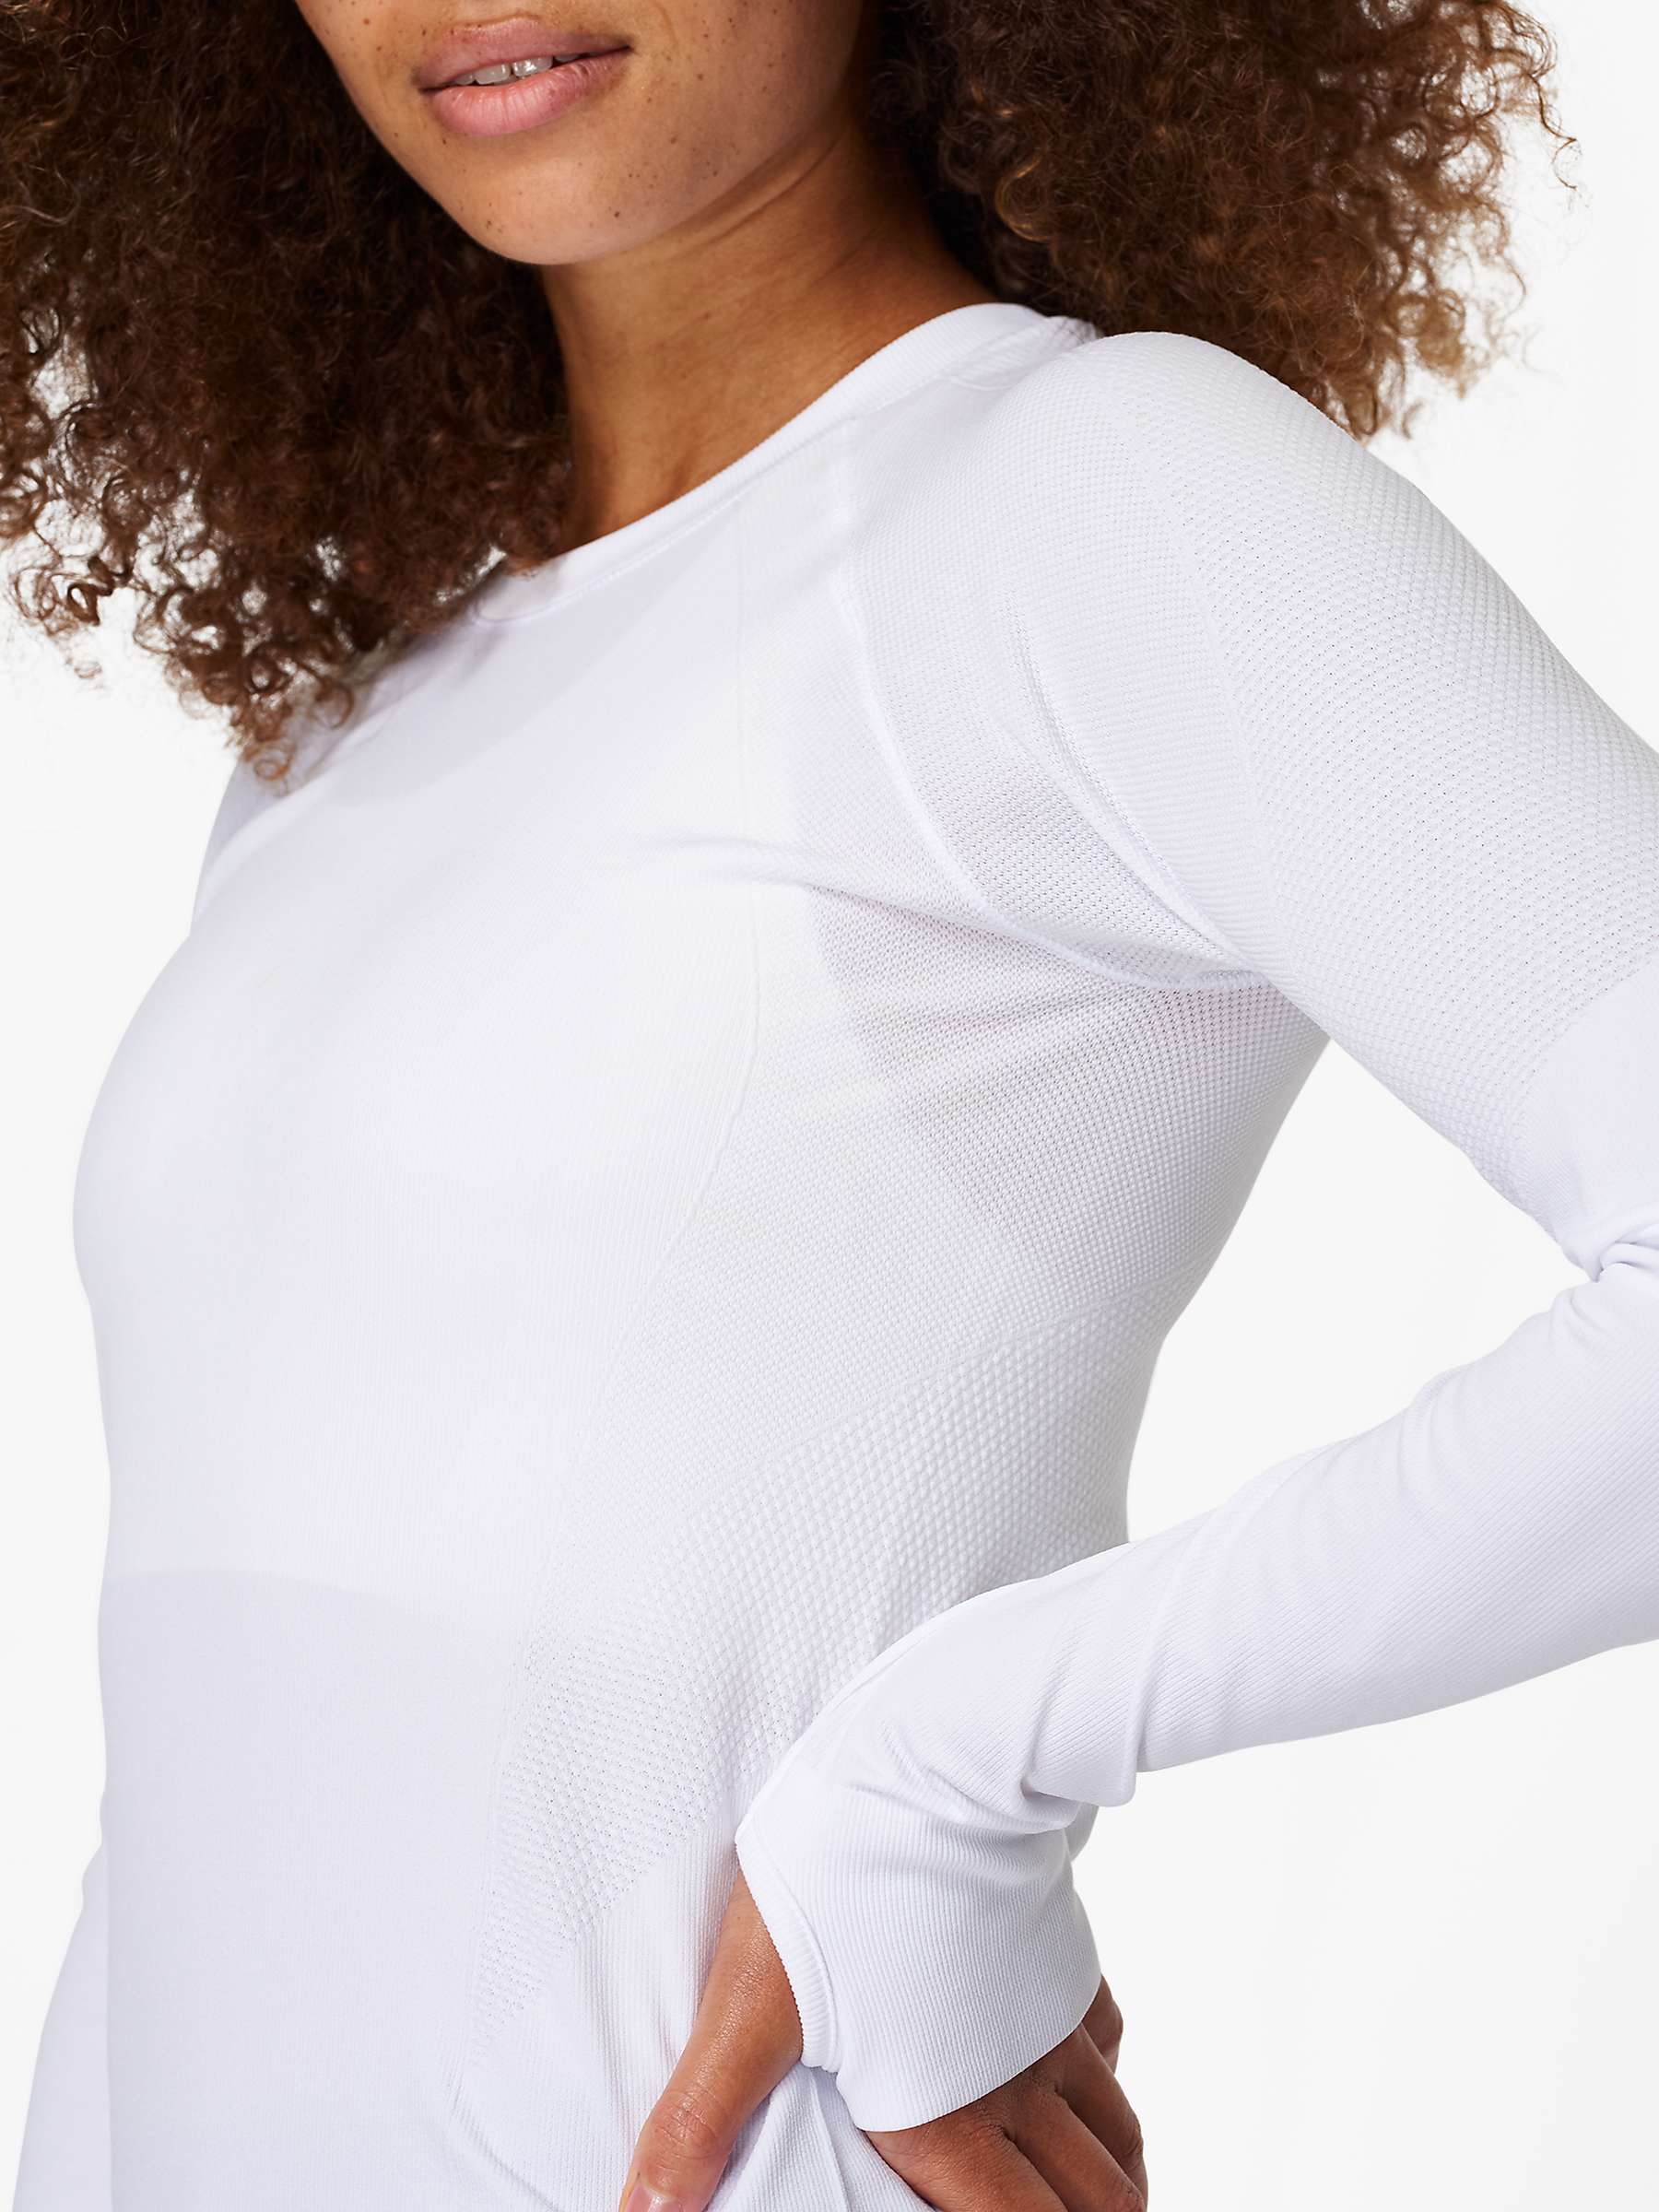 Buy Sweaty Betty Athlete Seamless Long Sleeve Top Online at johnlewis.com